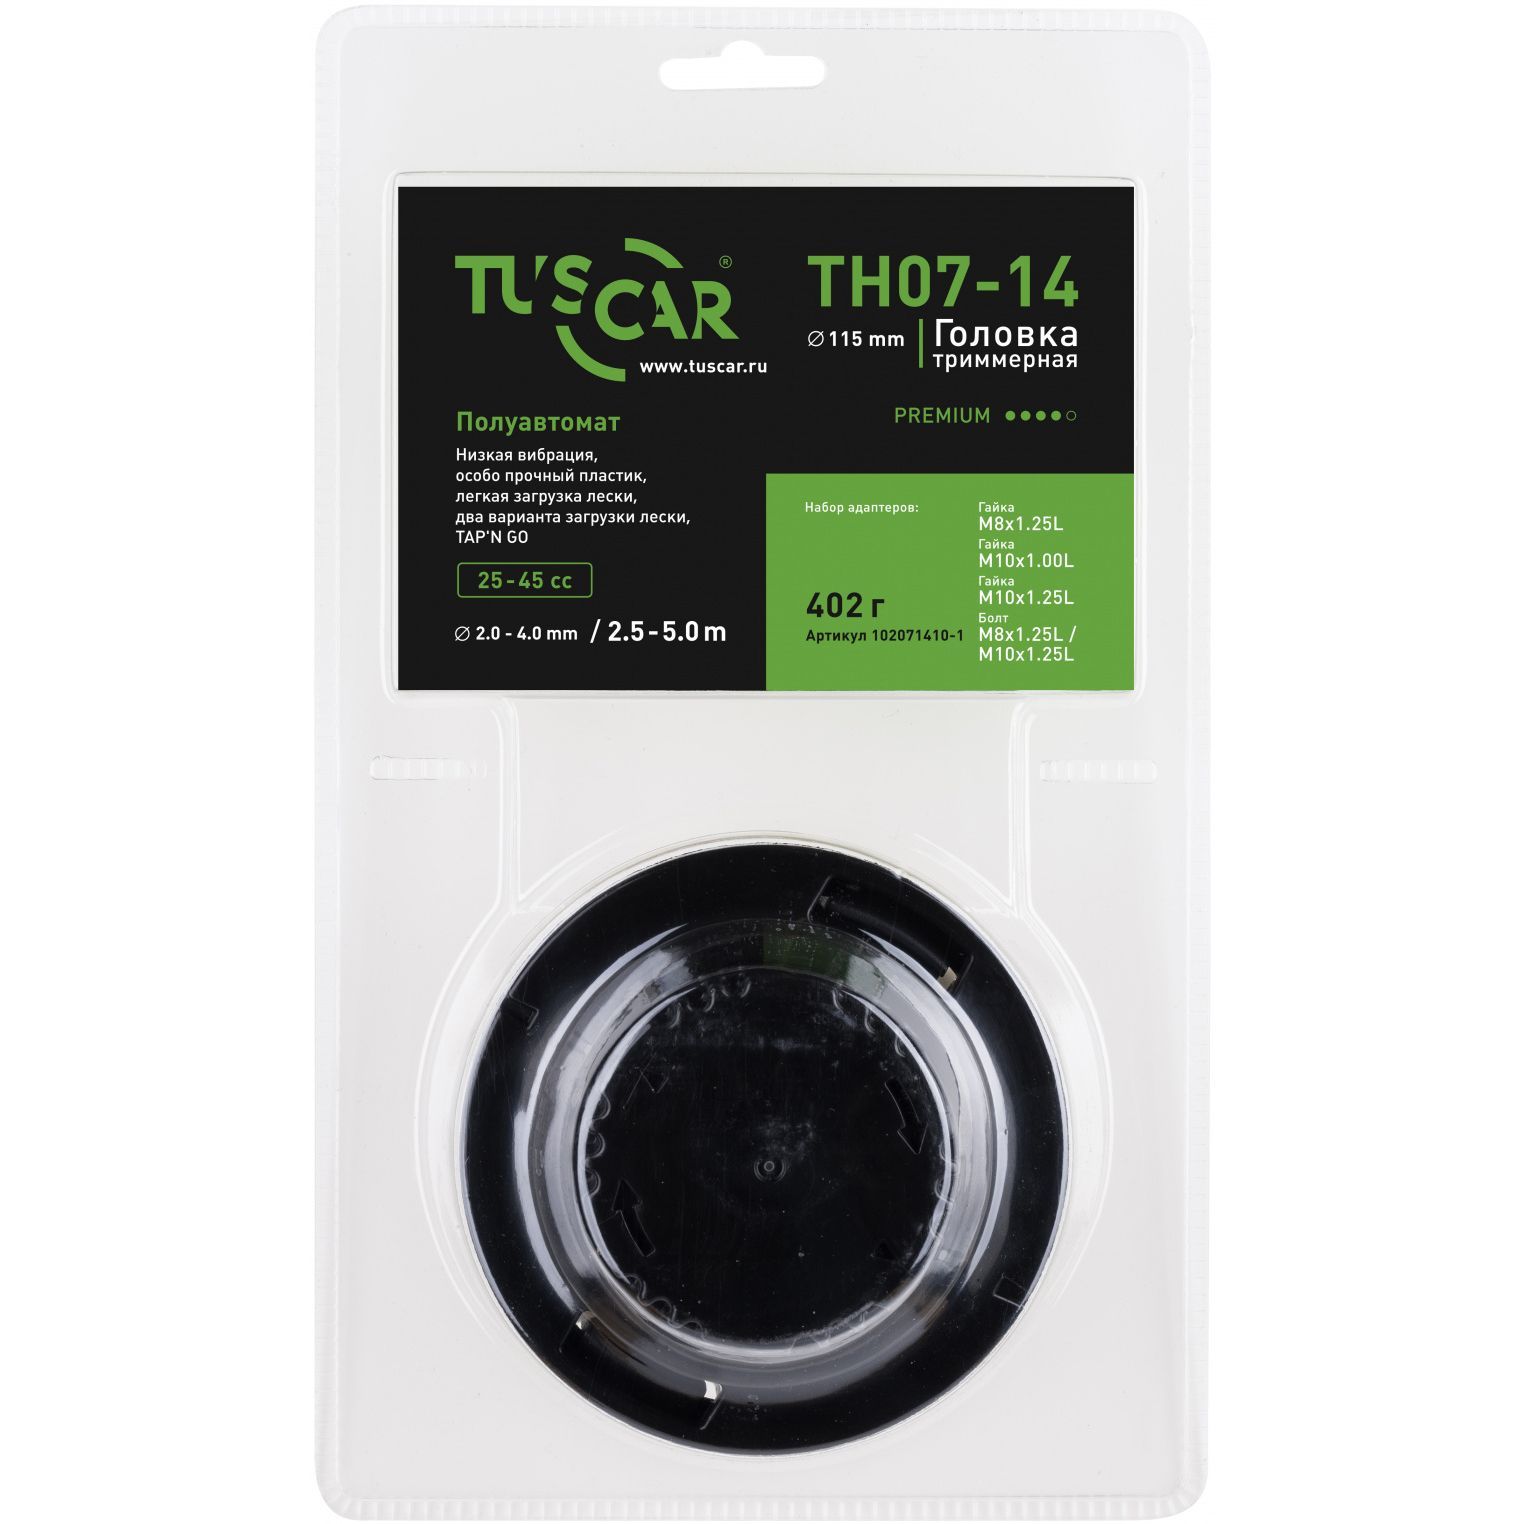 Головка триммерная Tuscar TH07-14 Premium набор адаптеров 102071410-1 Tuscar от магазина Tehnorama